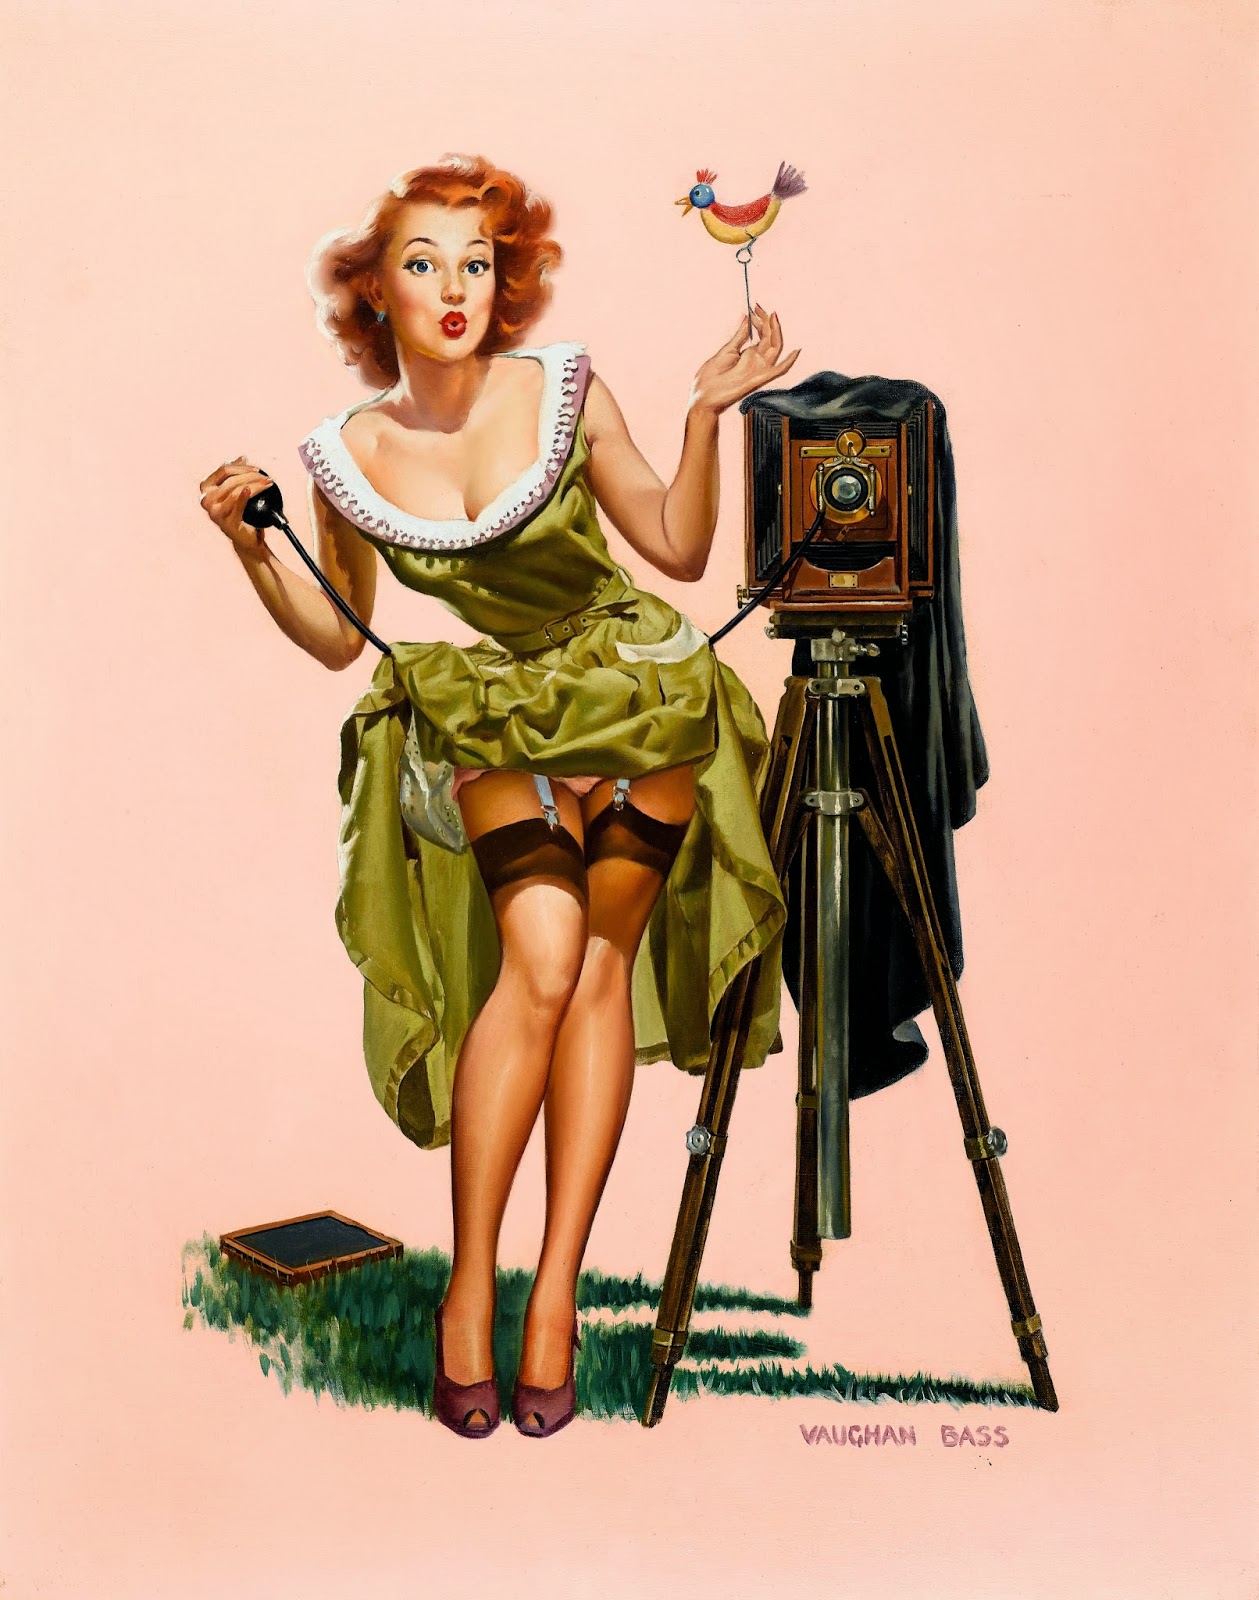 Vintage Pin Up Girl By Vaughan Bass – Pin Up And Cartoon Girls Art